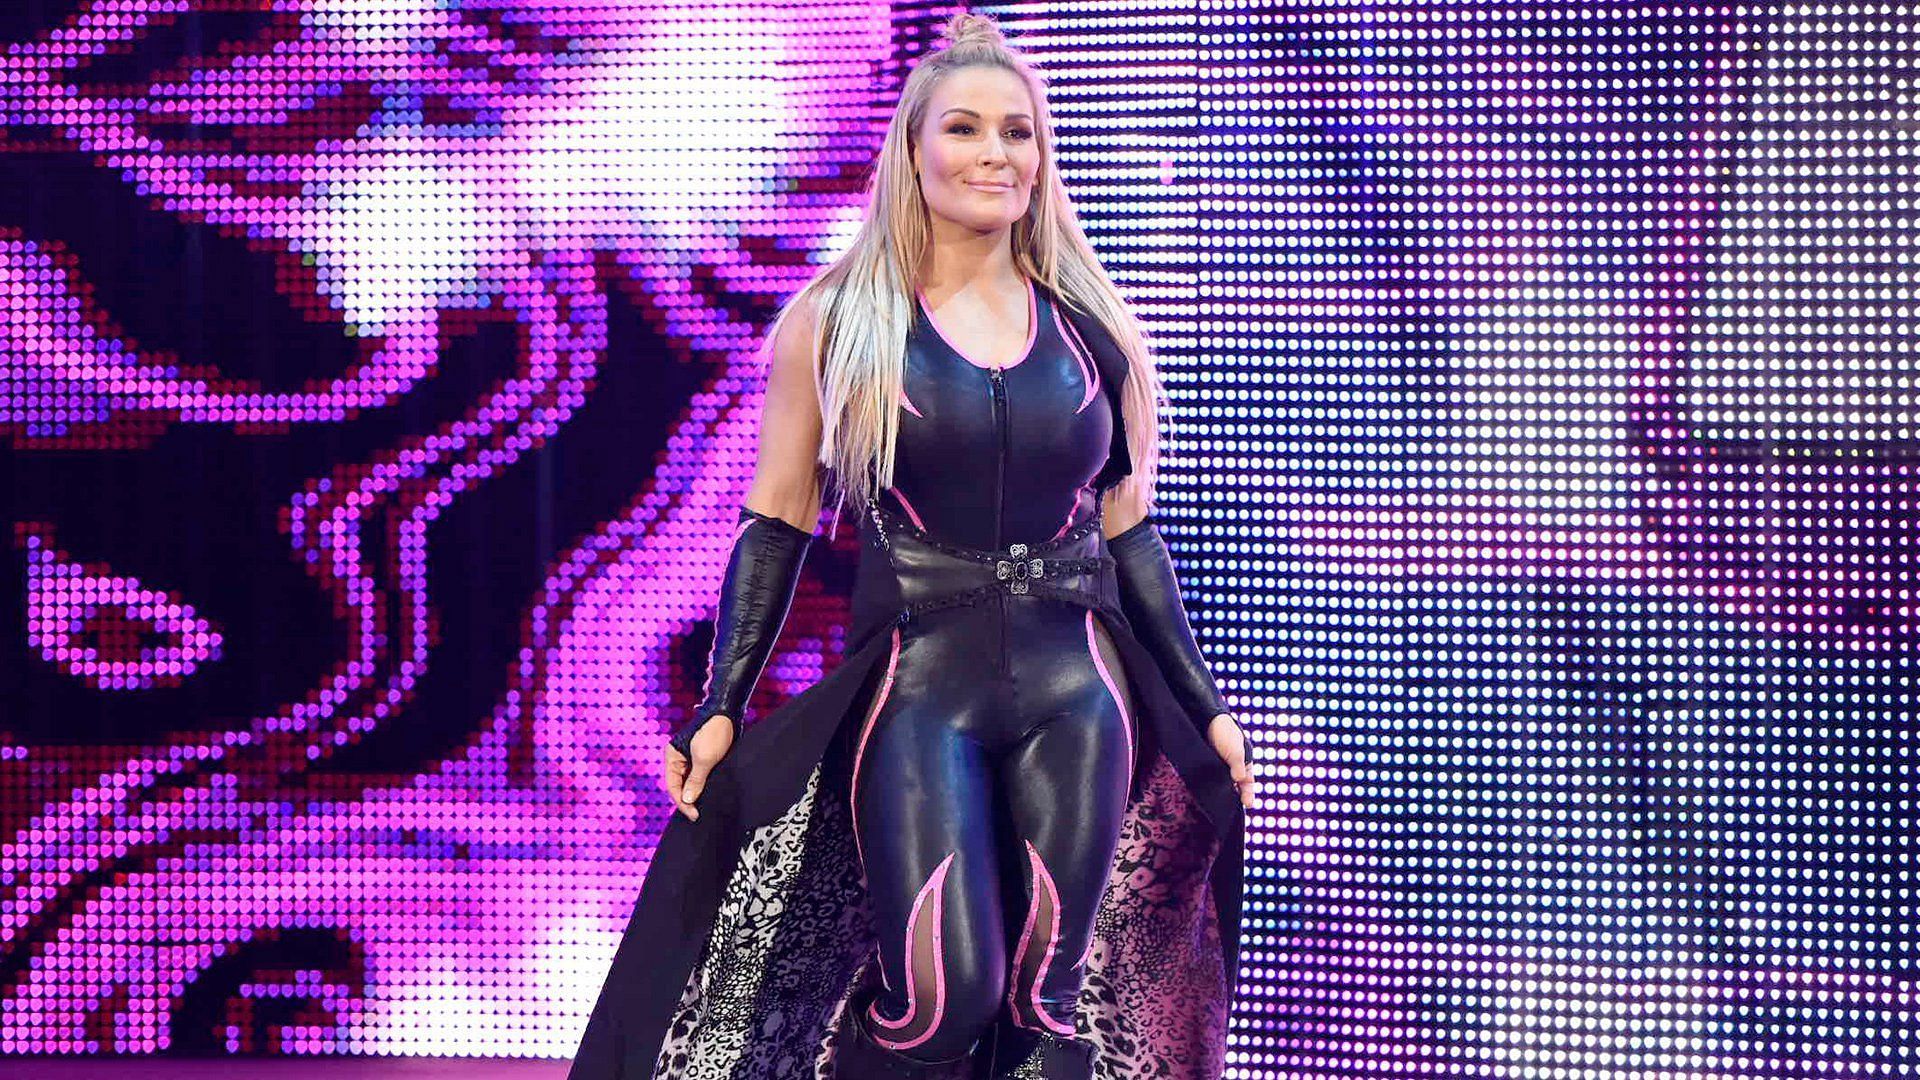 Natalya makes her entrance on WWE RAW